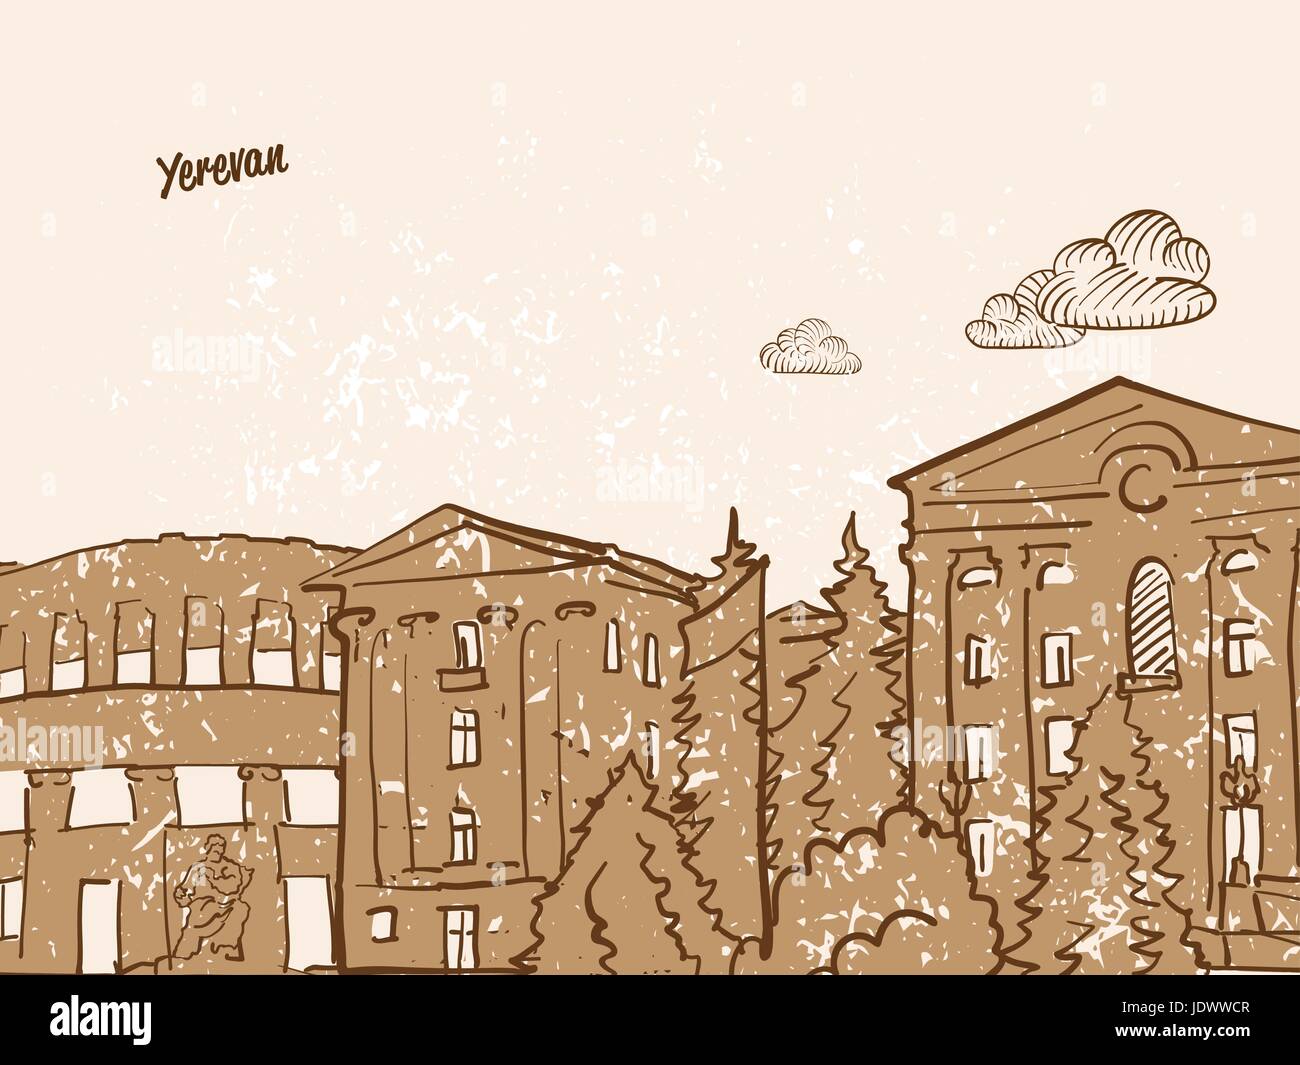 Yerevan, Armenia, Greeting Card, hand drawn image, famous european capital, vintage style, vector Illustration Stock Vector